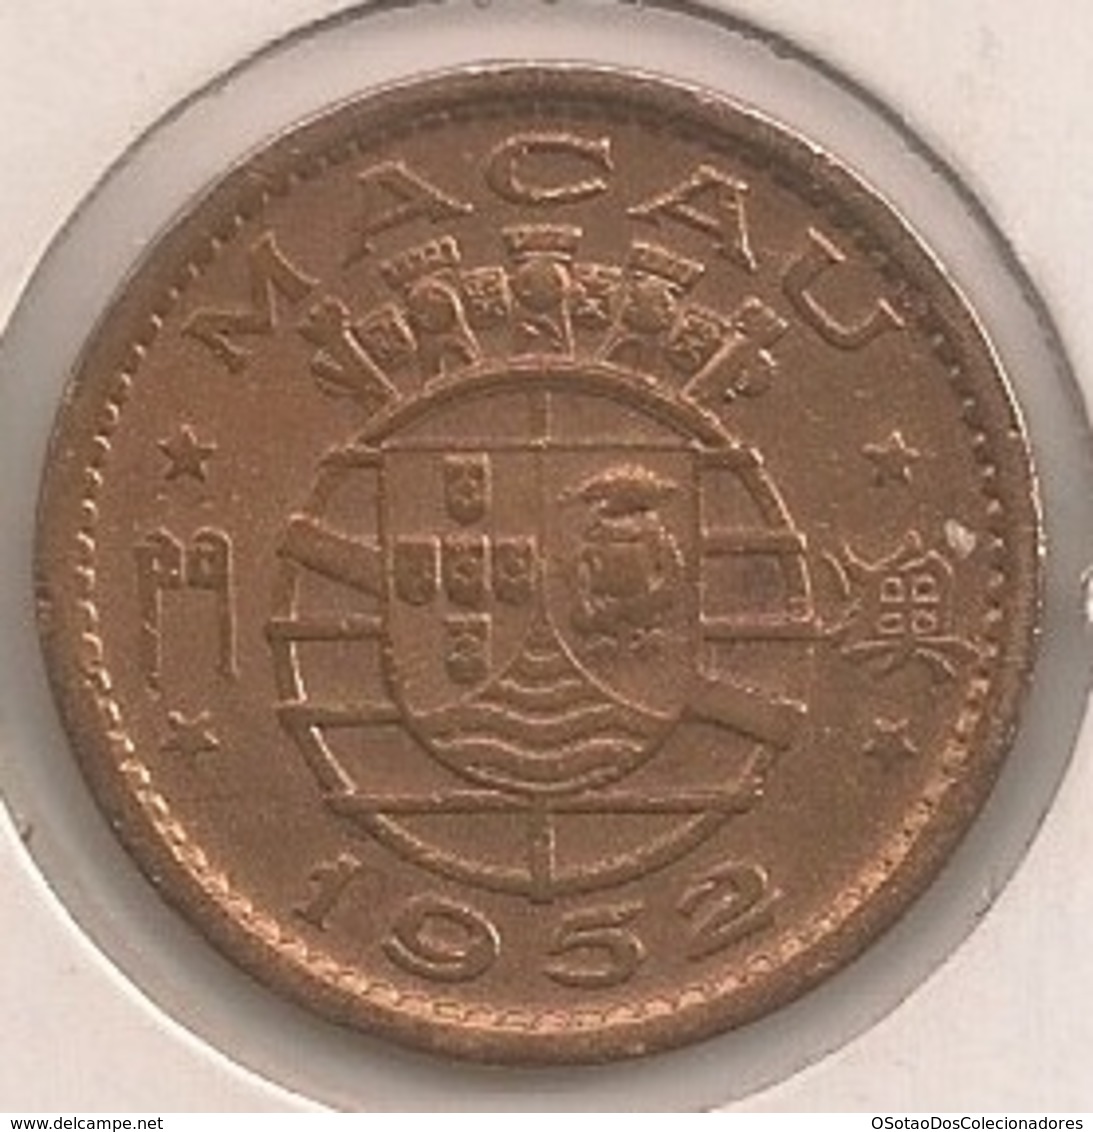 Moeda Macau/Portugal - Coin Macao 10 Avos 1952 - MBC + - Macao